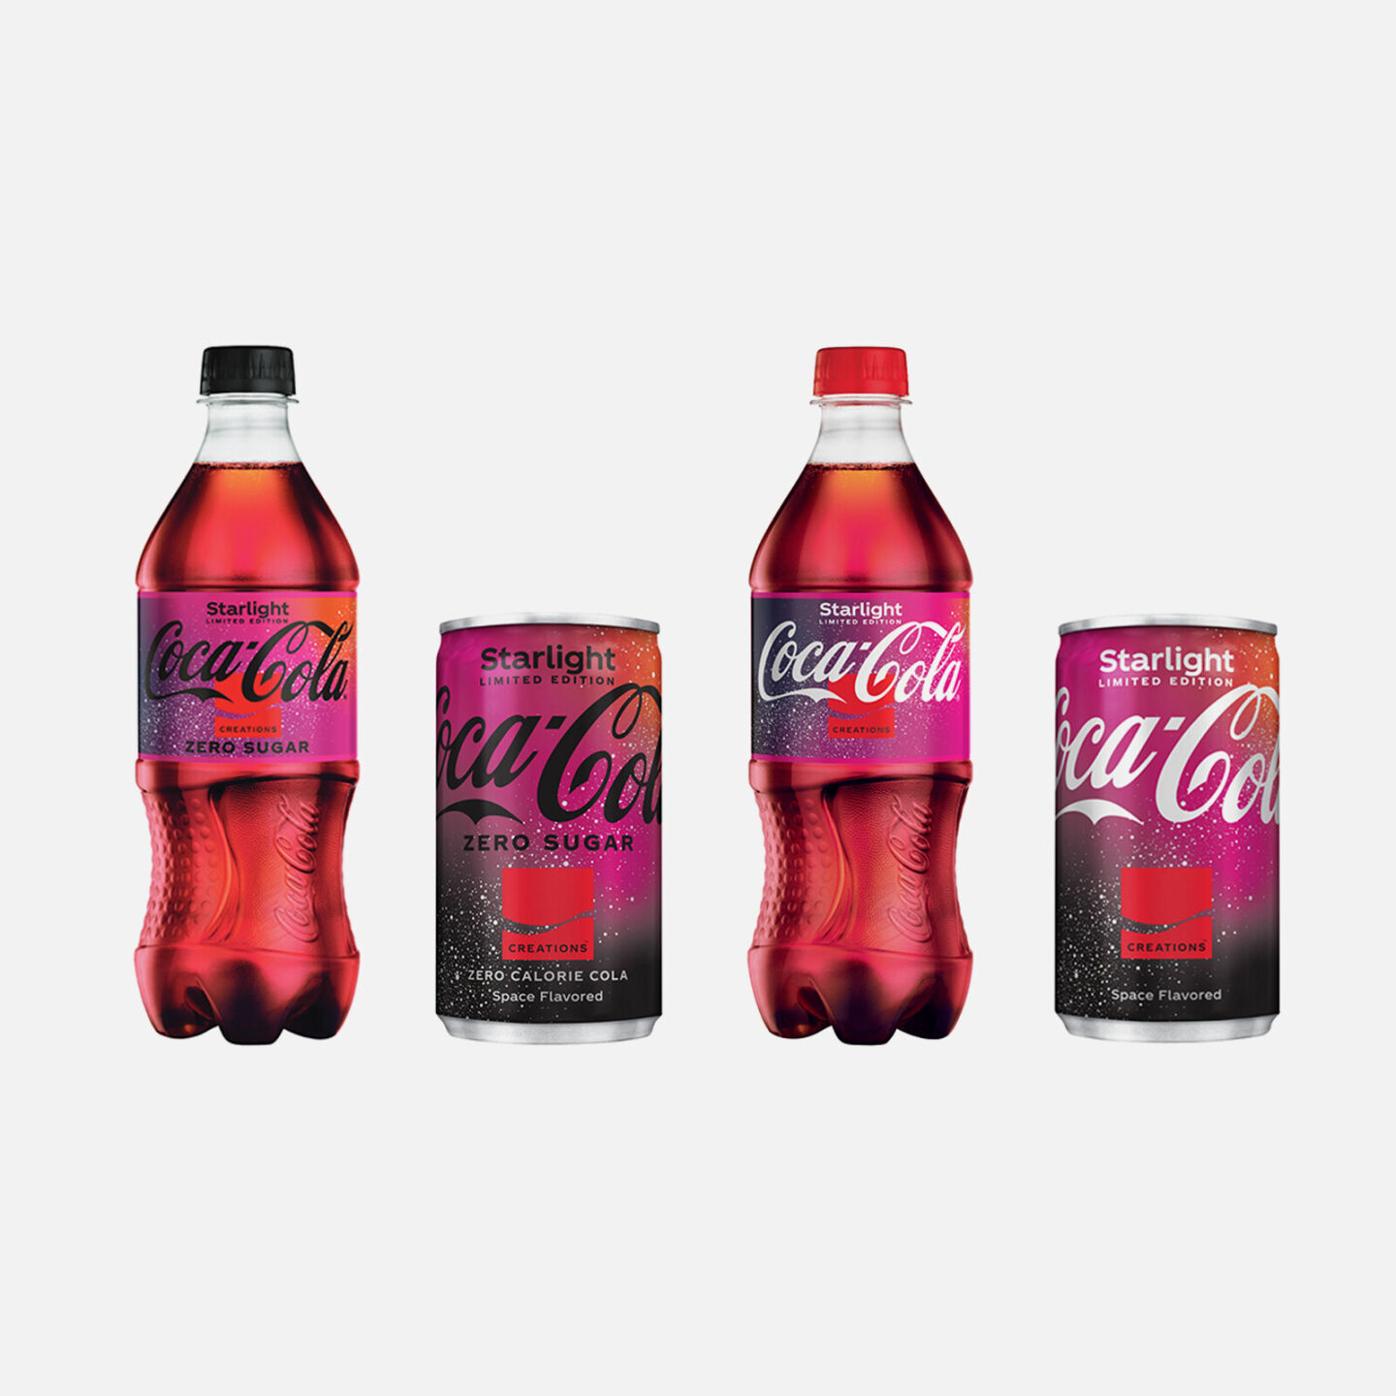 Limited Edition Coca-Cola Creations